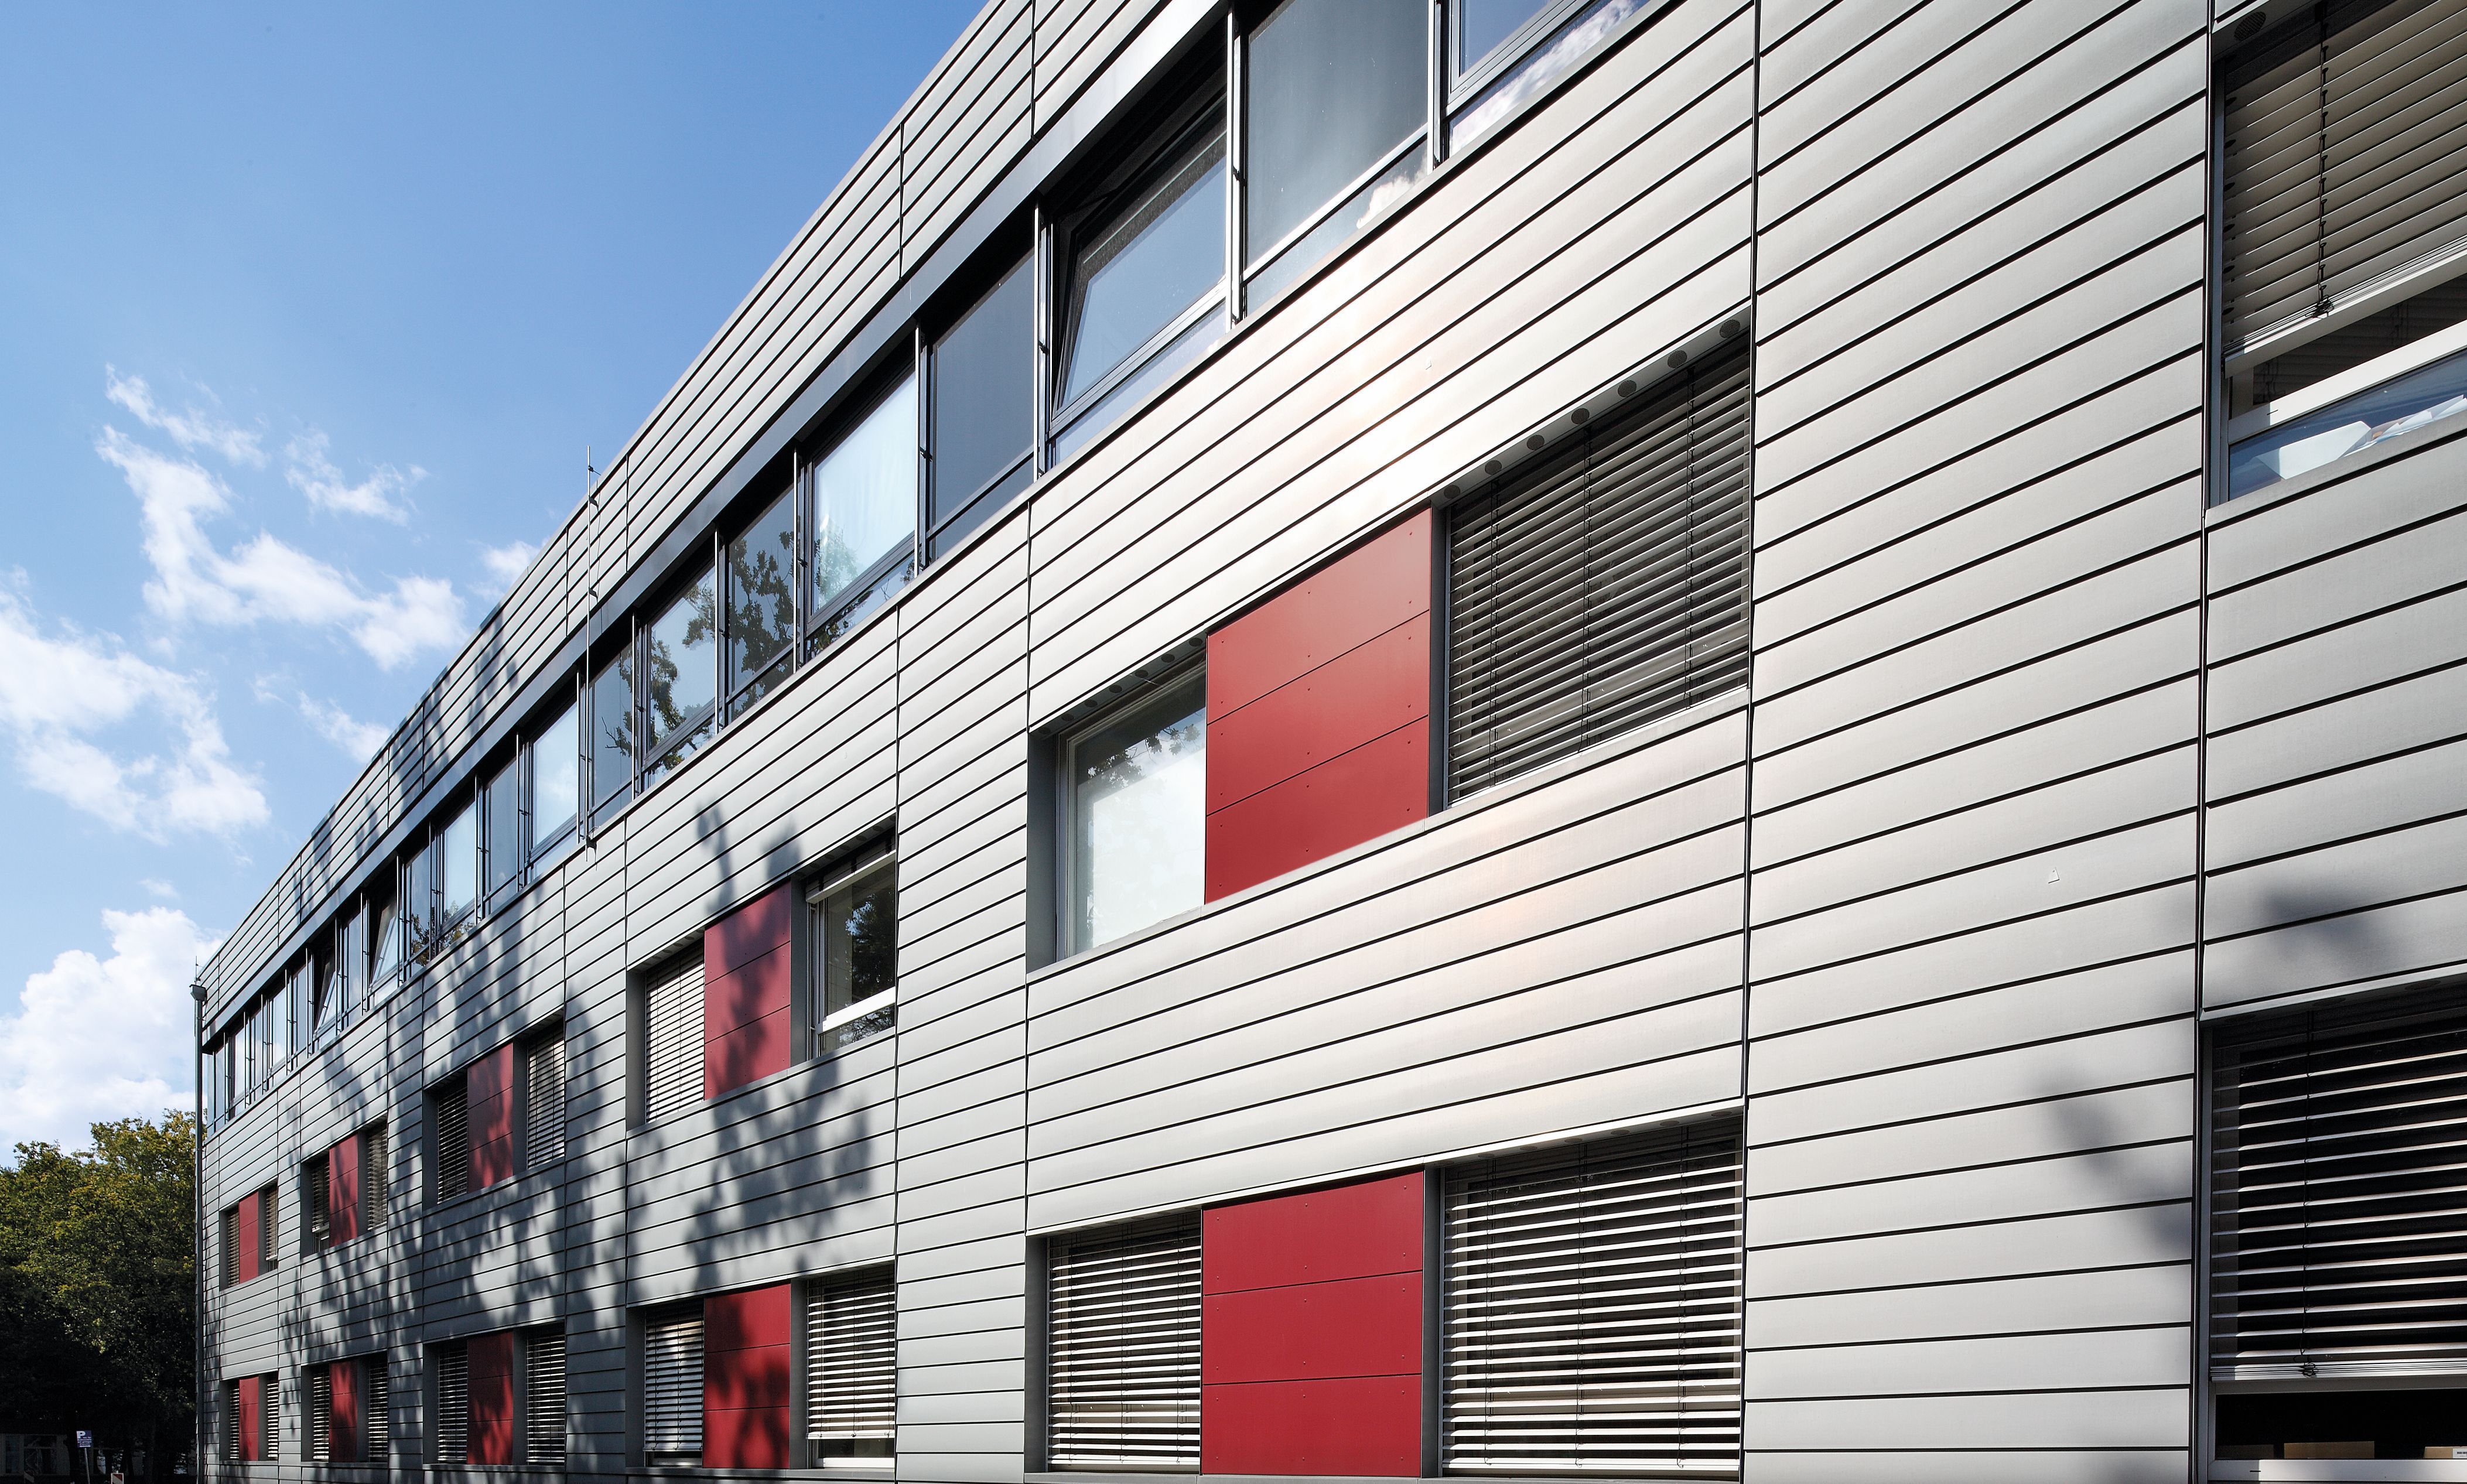 Forschungsinstitut mit Stulppaneel-Fassade